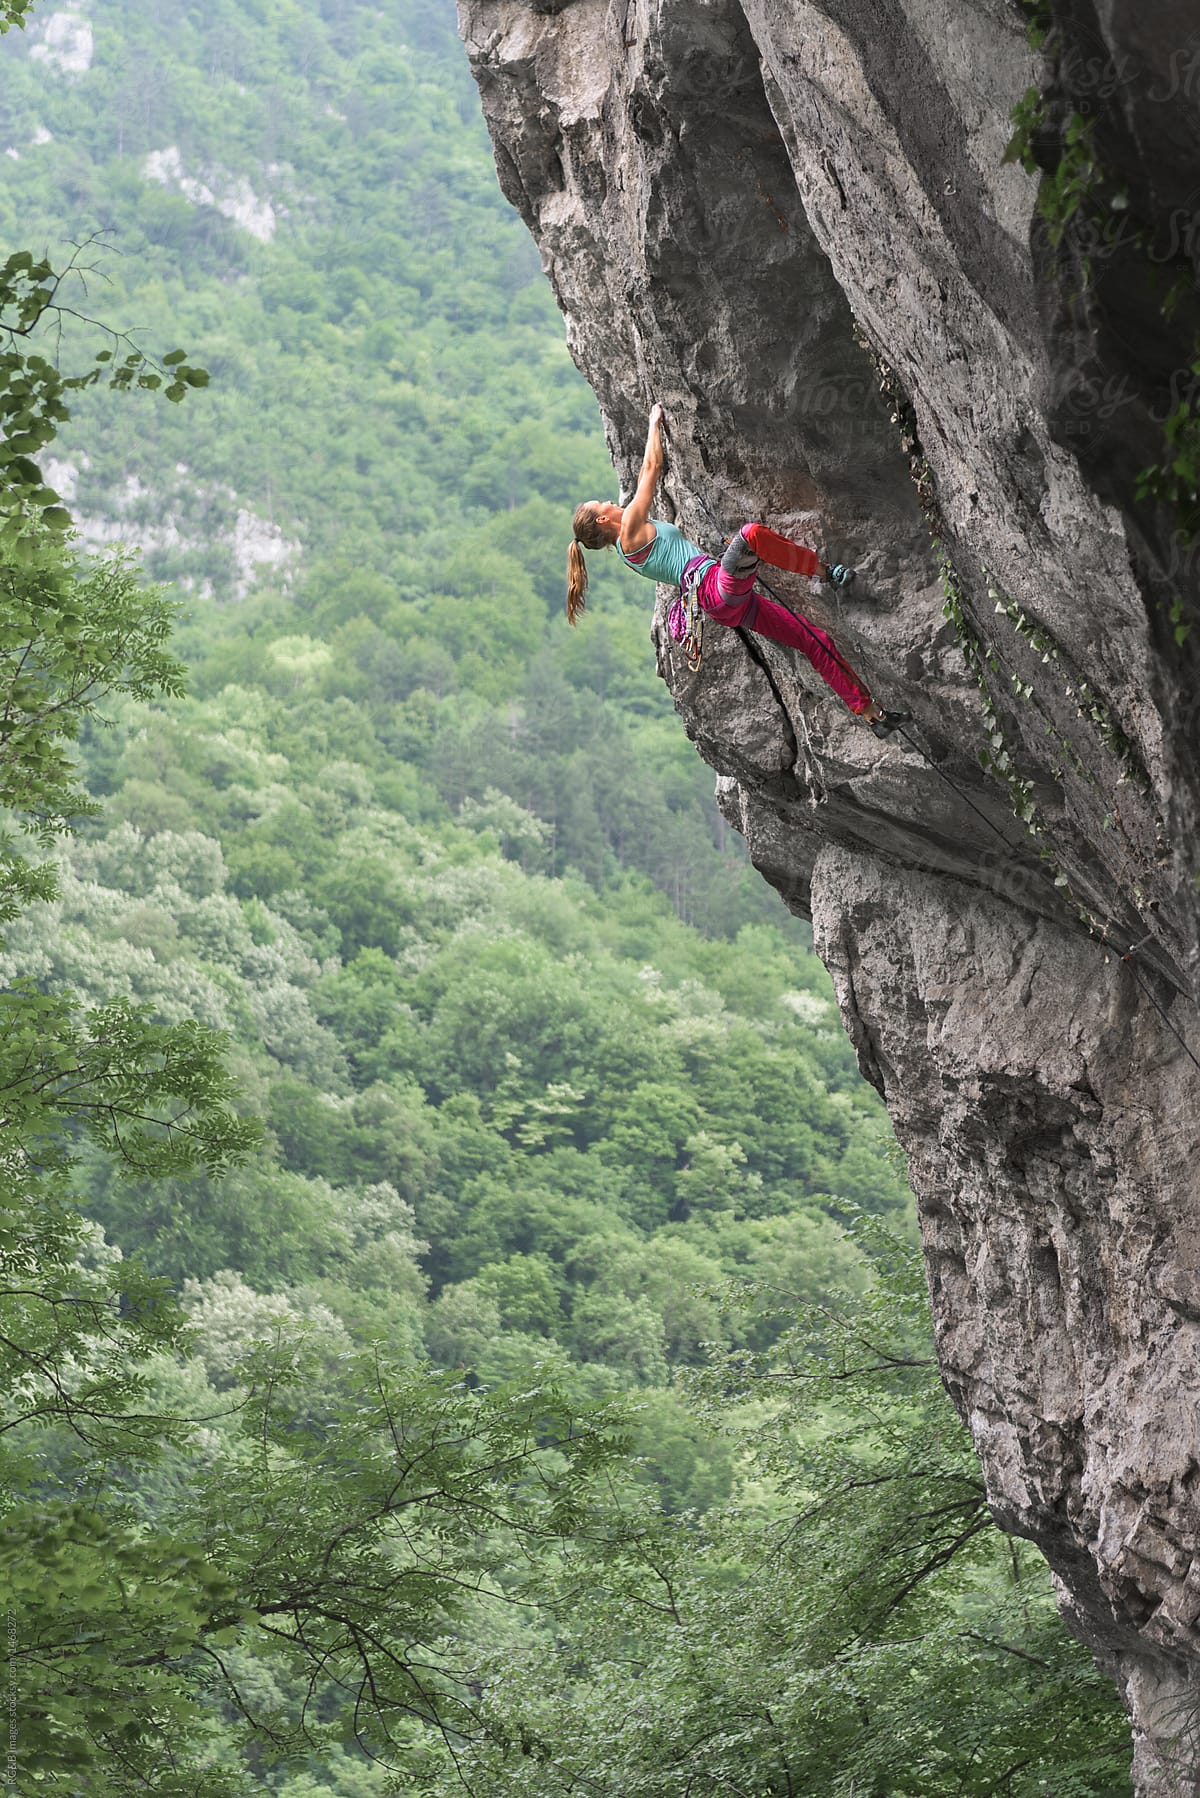 Side view of woman rock climbing on craggy rock facade